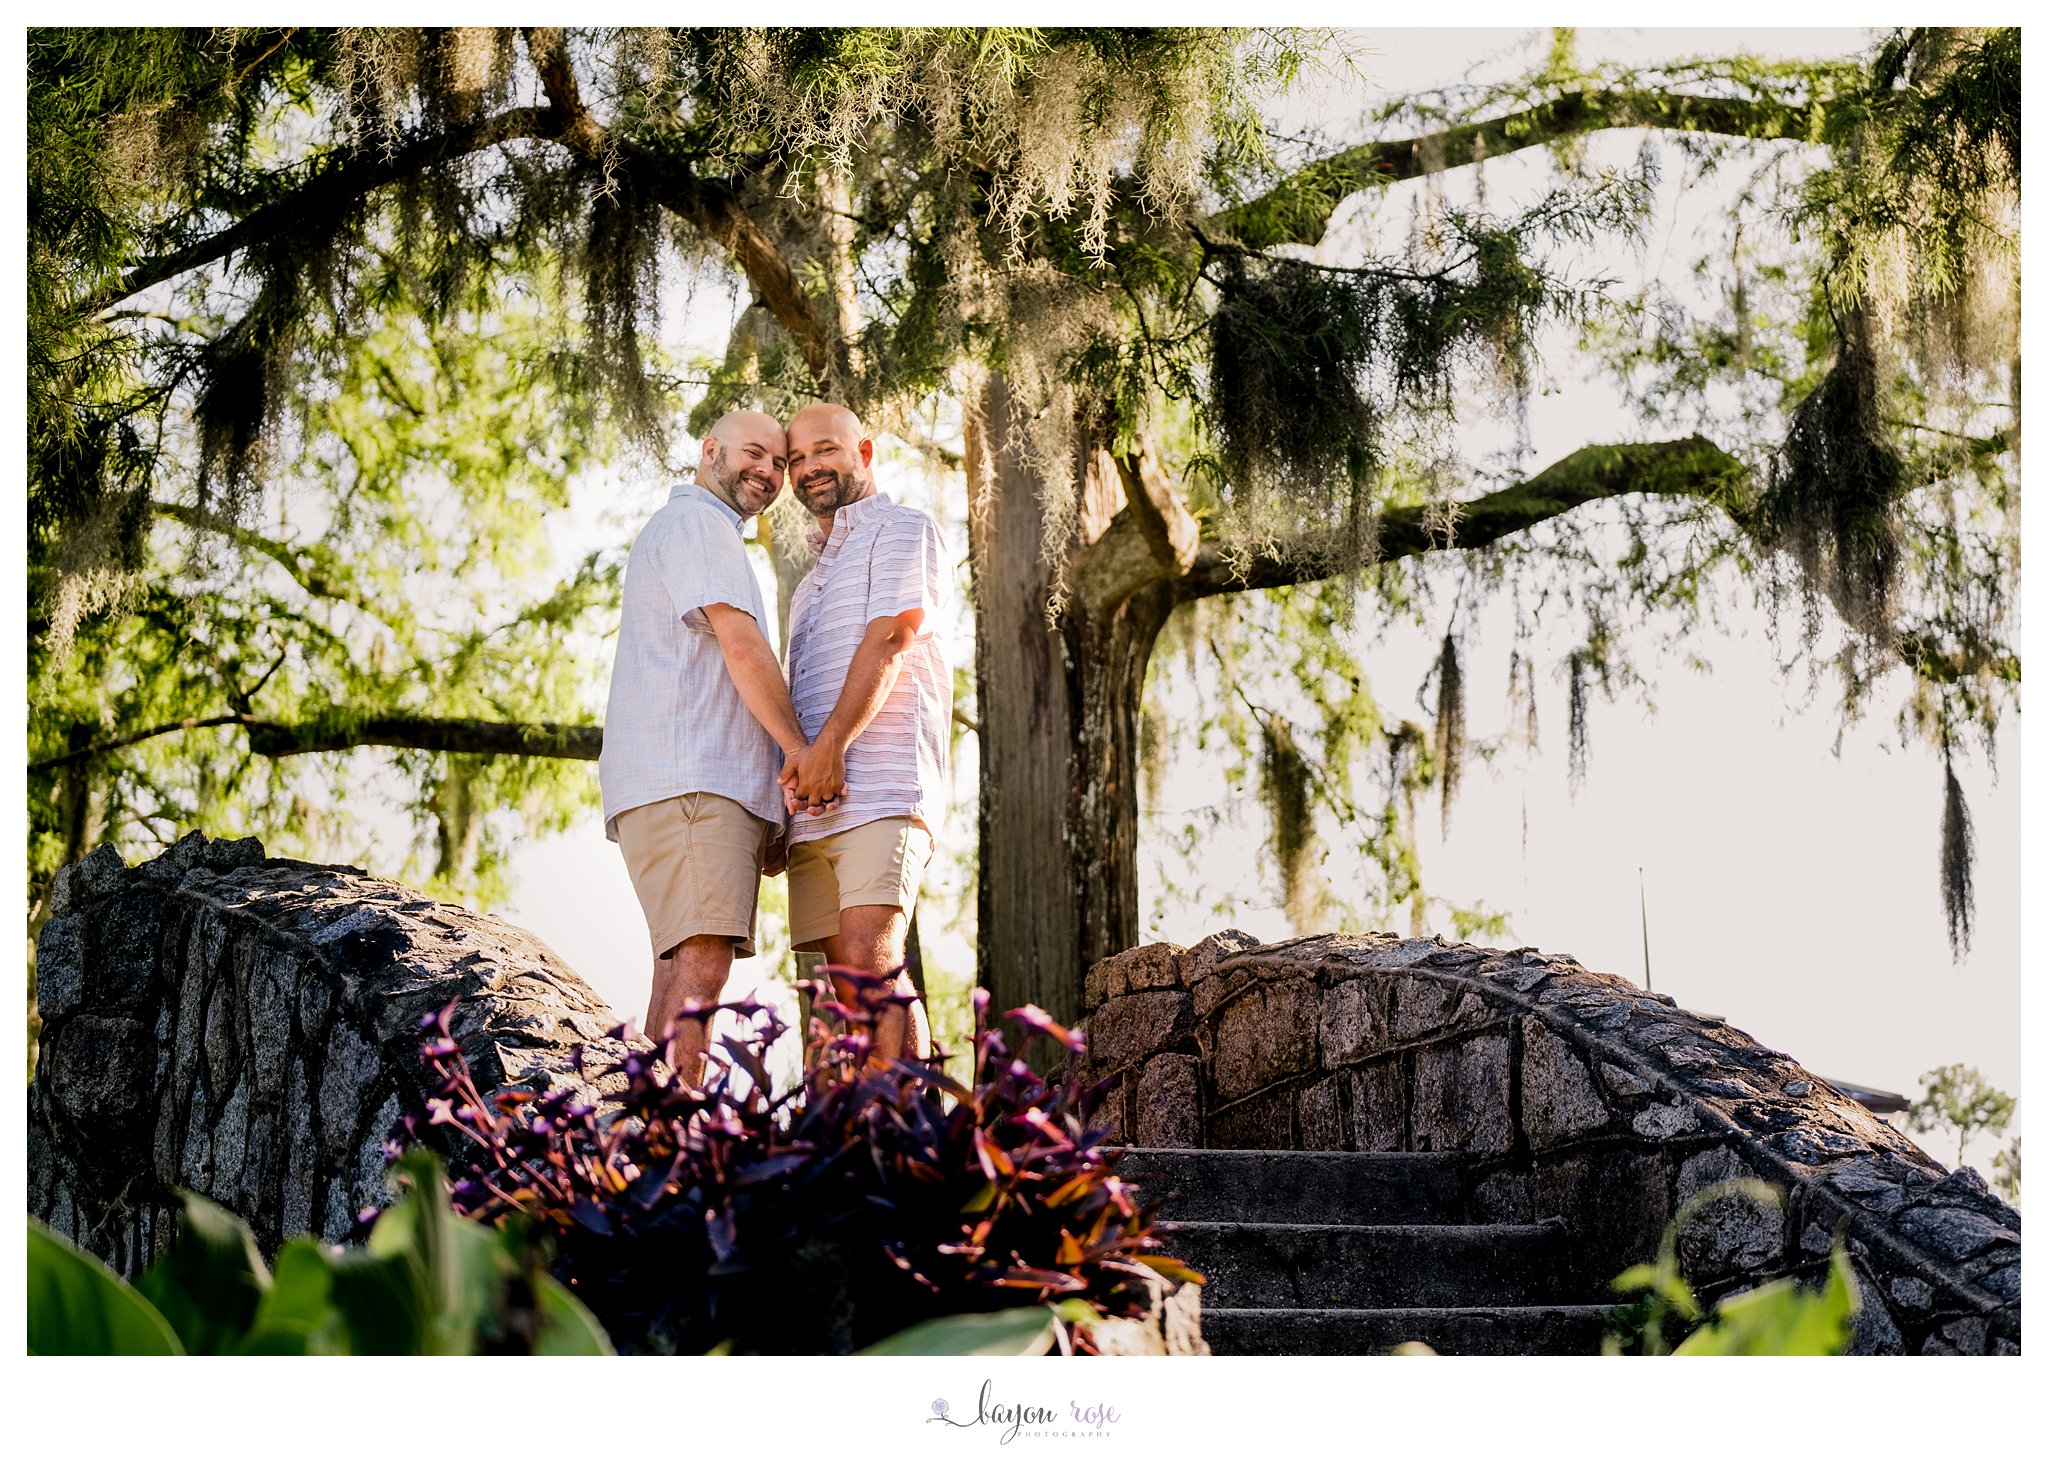 Engagement photos on stone bridge in City Park New Orleans